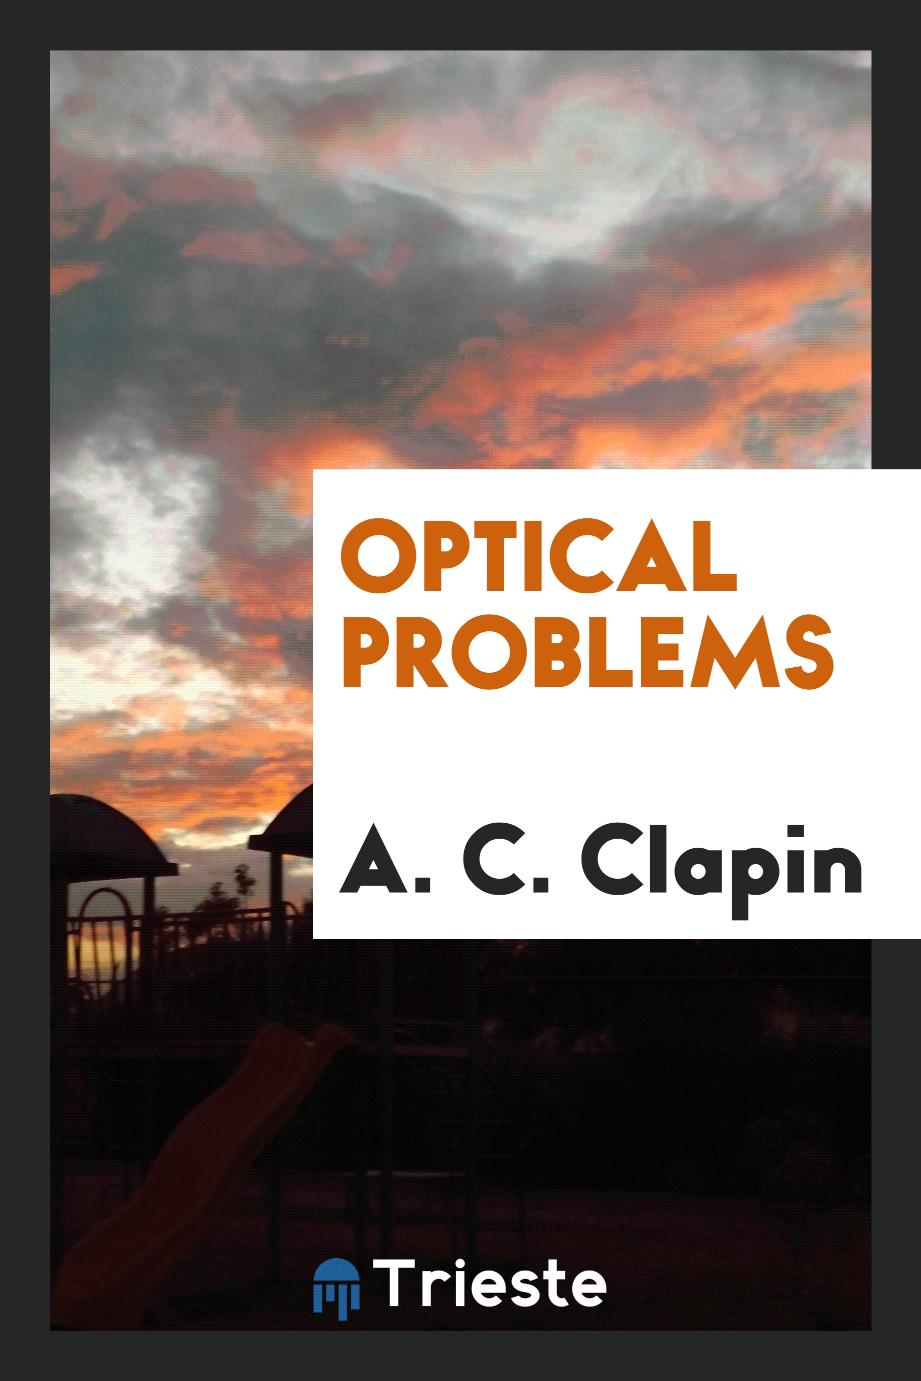 Optical problems